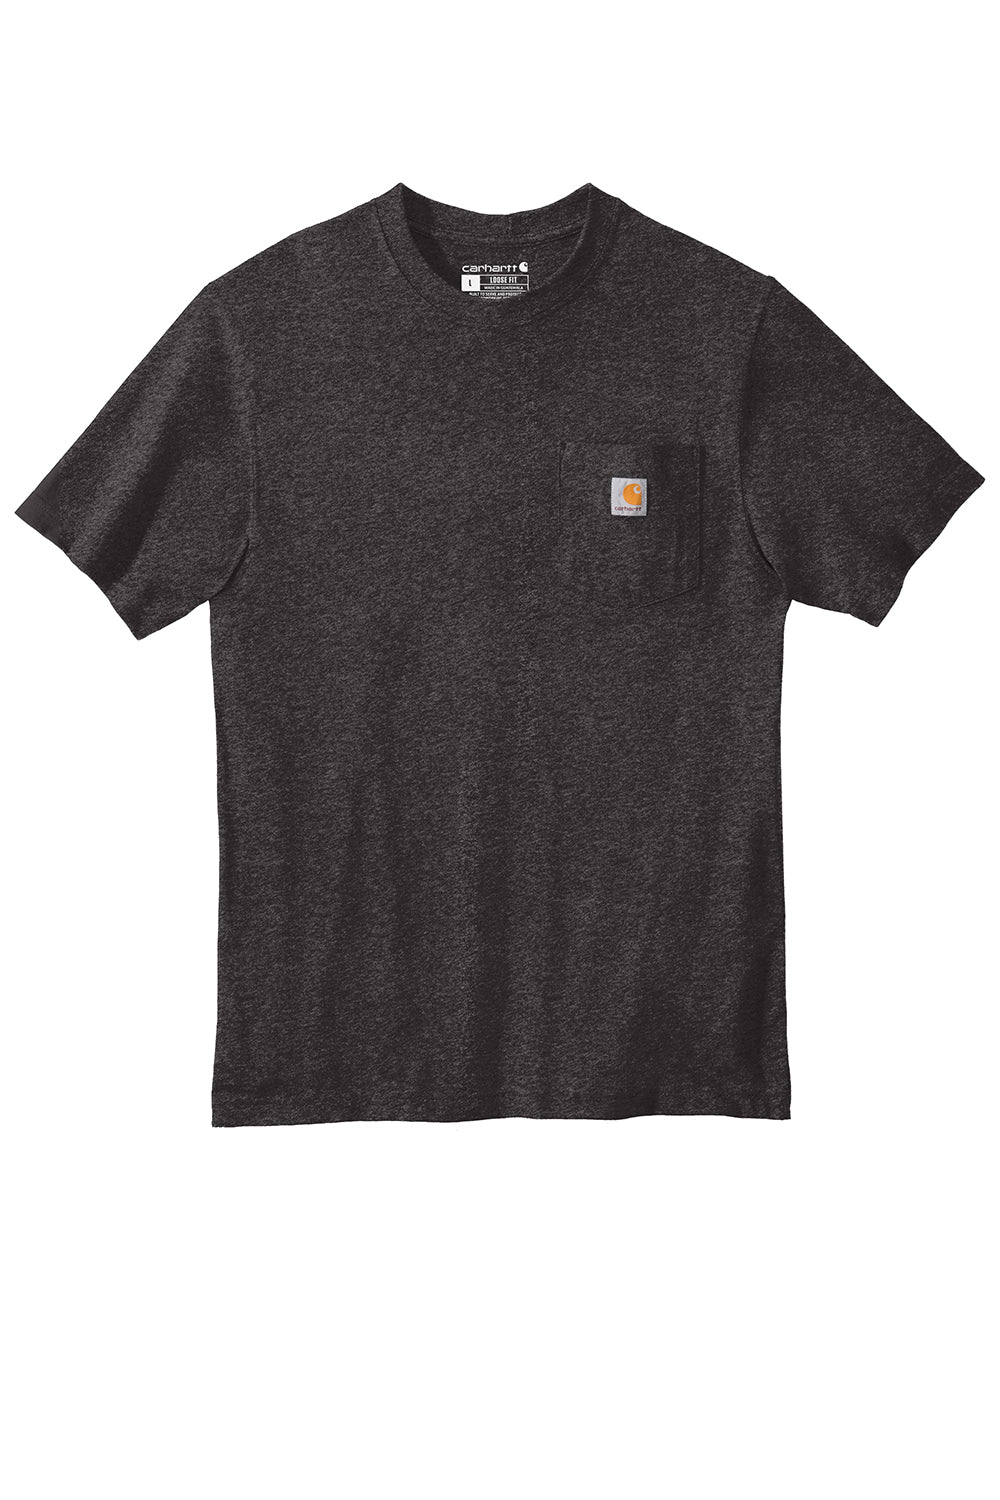 Carhartt CTK87/CTTK87 Mens Workwear Short Sleeve Crewneck T-Shirt w/ Pocket Heather Carbon Grey Flat Front